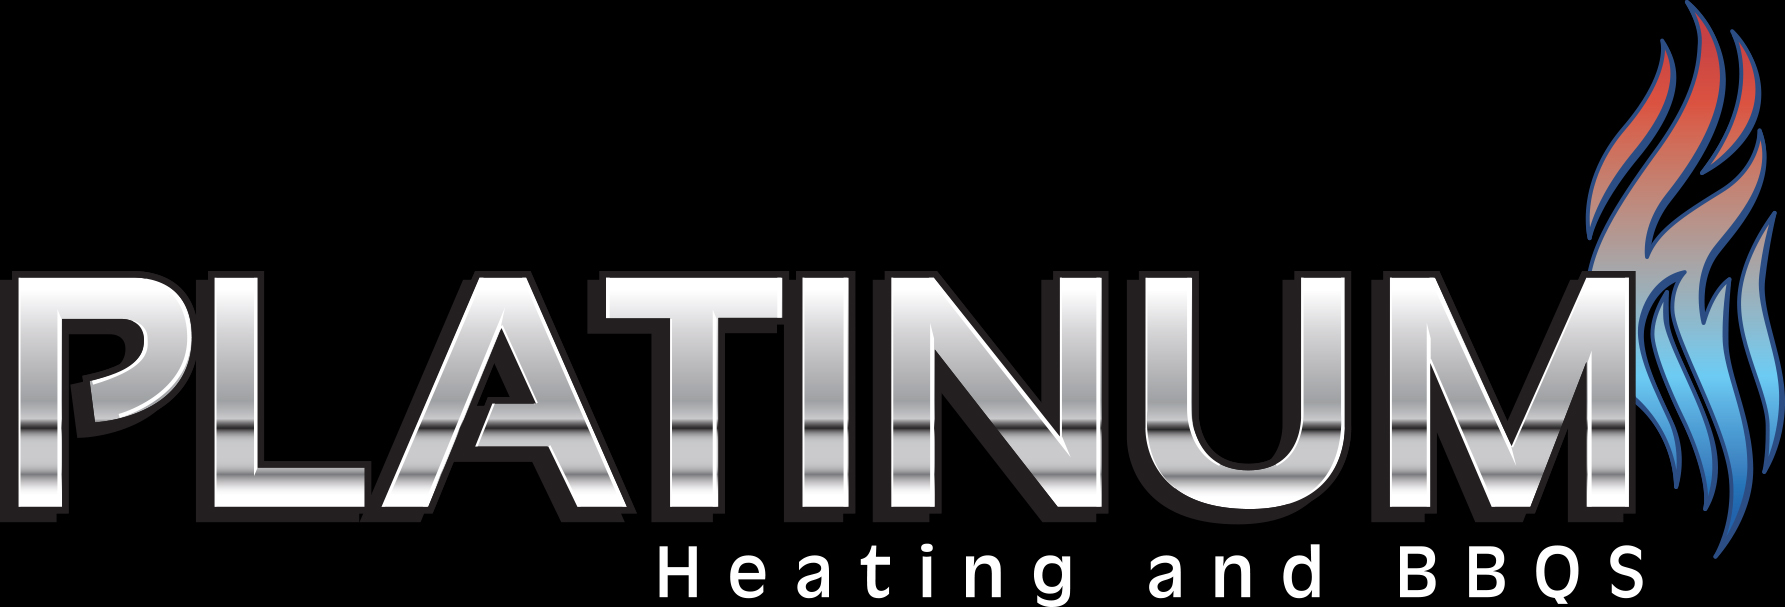 Platinum Heating and BBQs